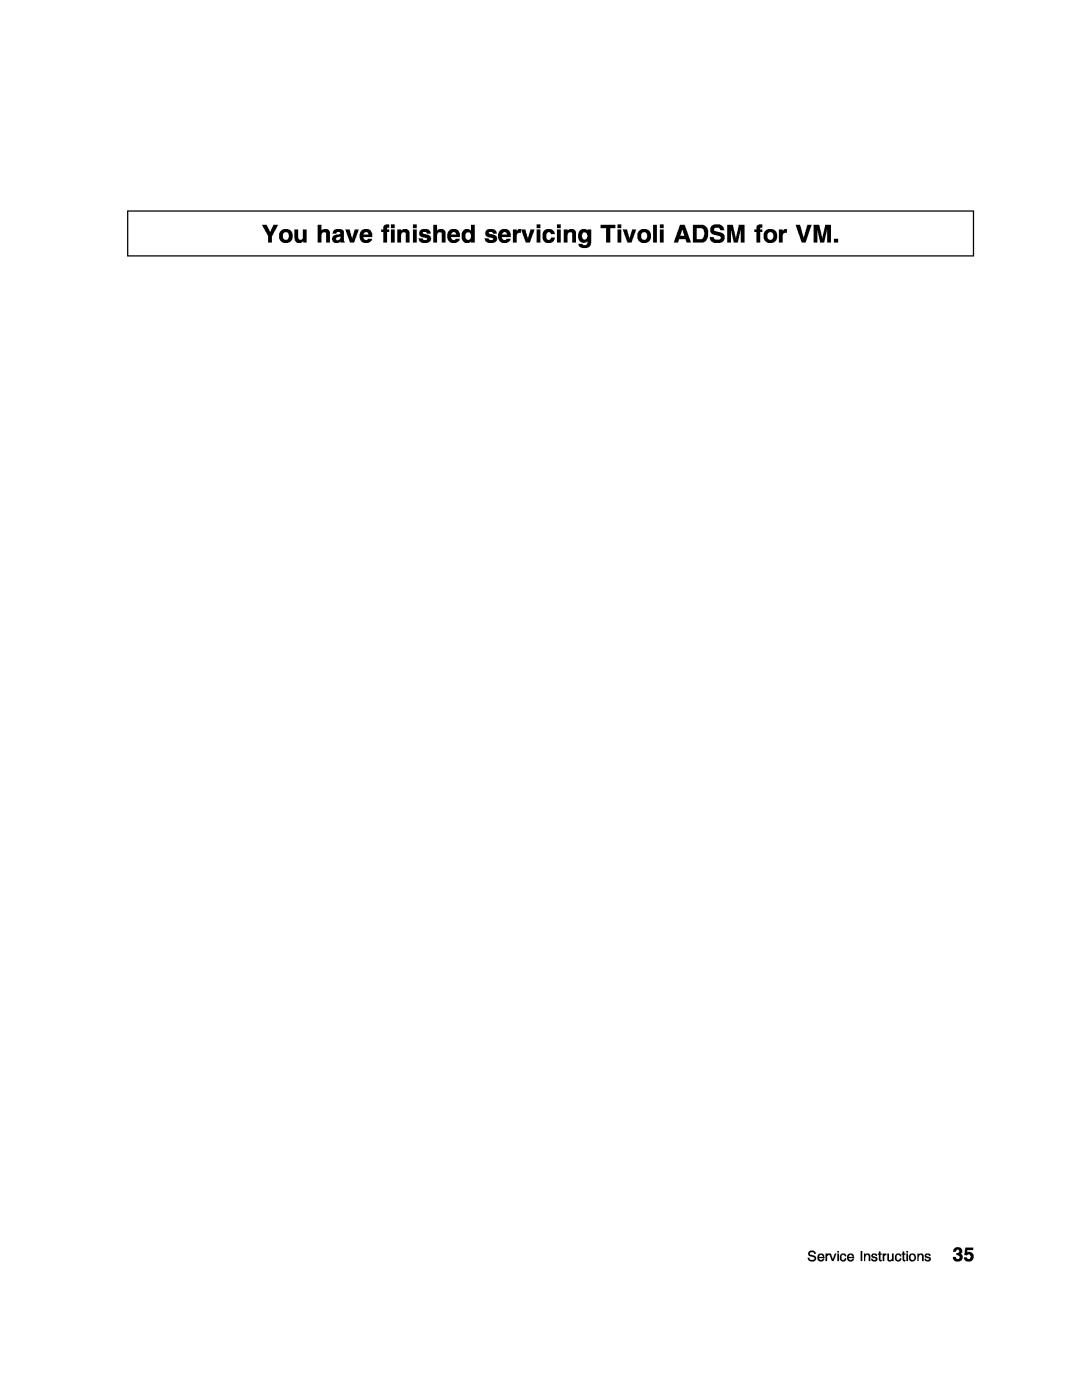 IBM 5697-VM3 manual You have finished servicing Tivoli ADSM for VM, Service Instructions 